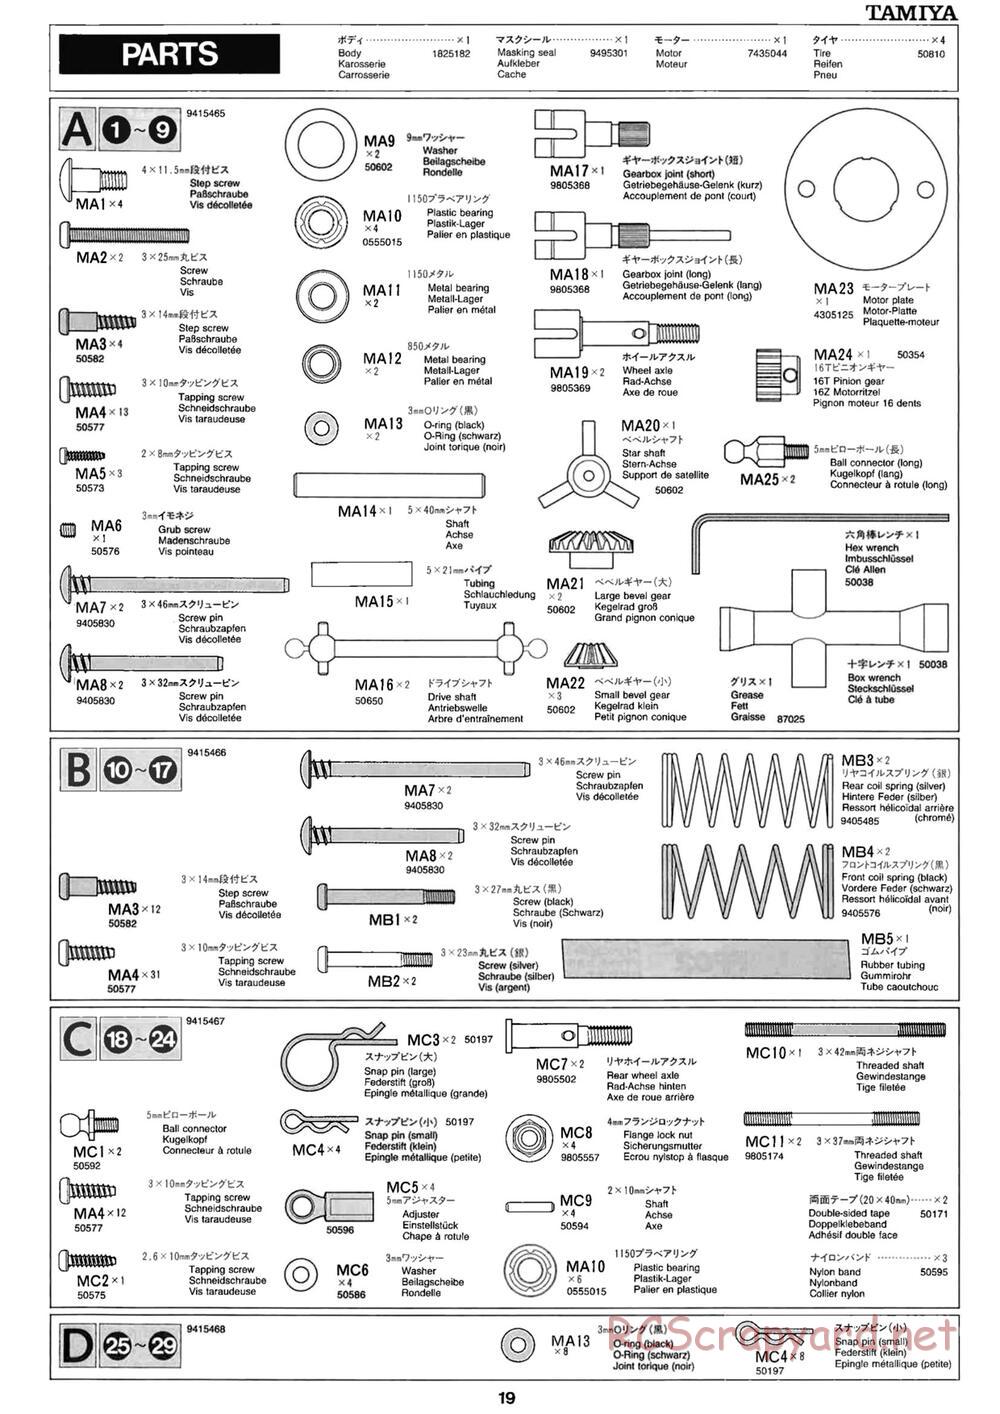 Tamiya - FF-02 Chassis - Manual - Page 15